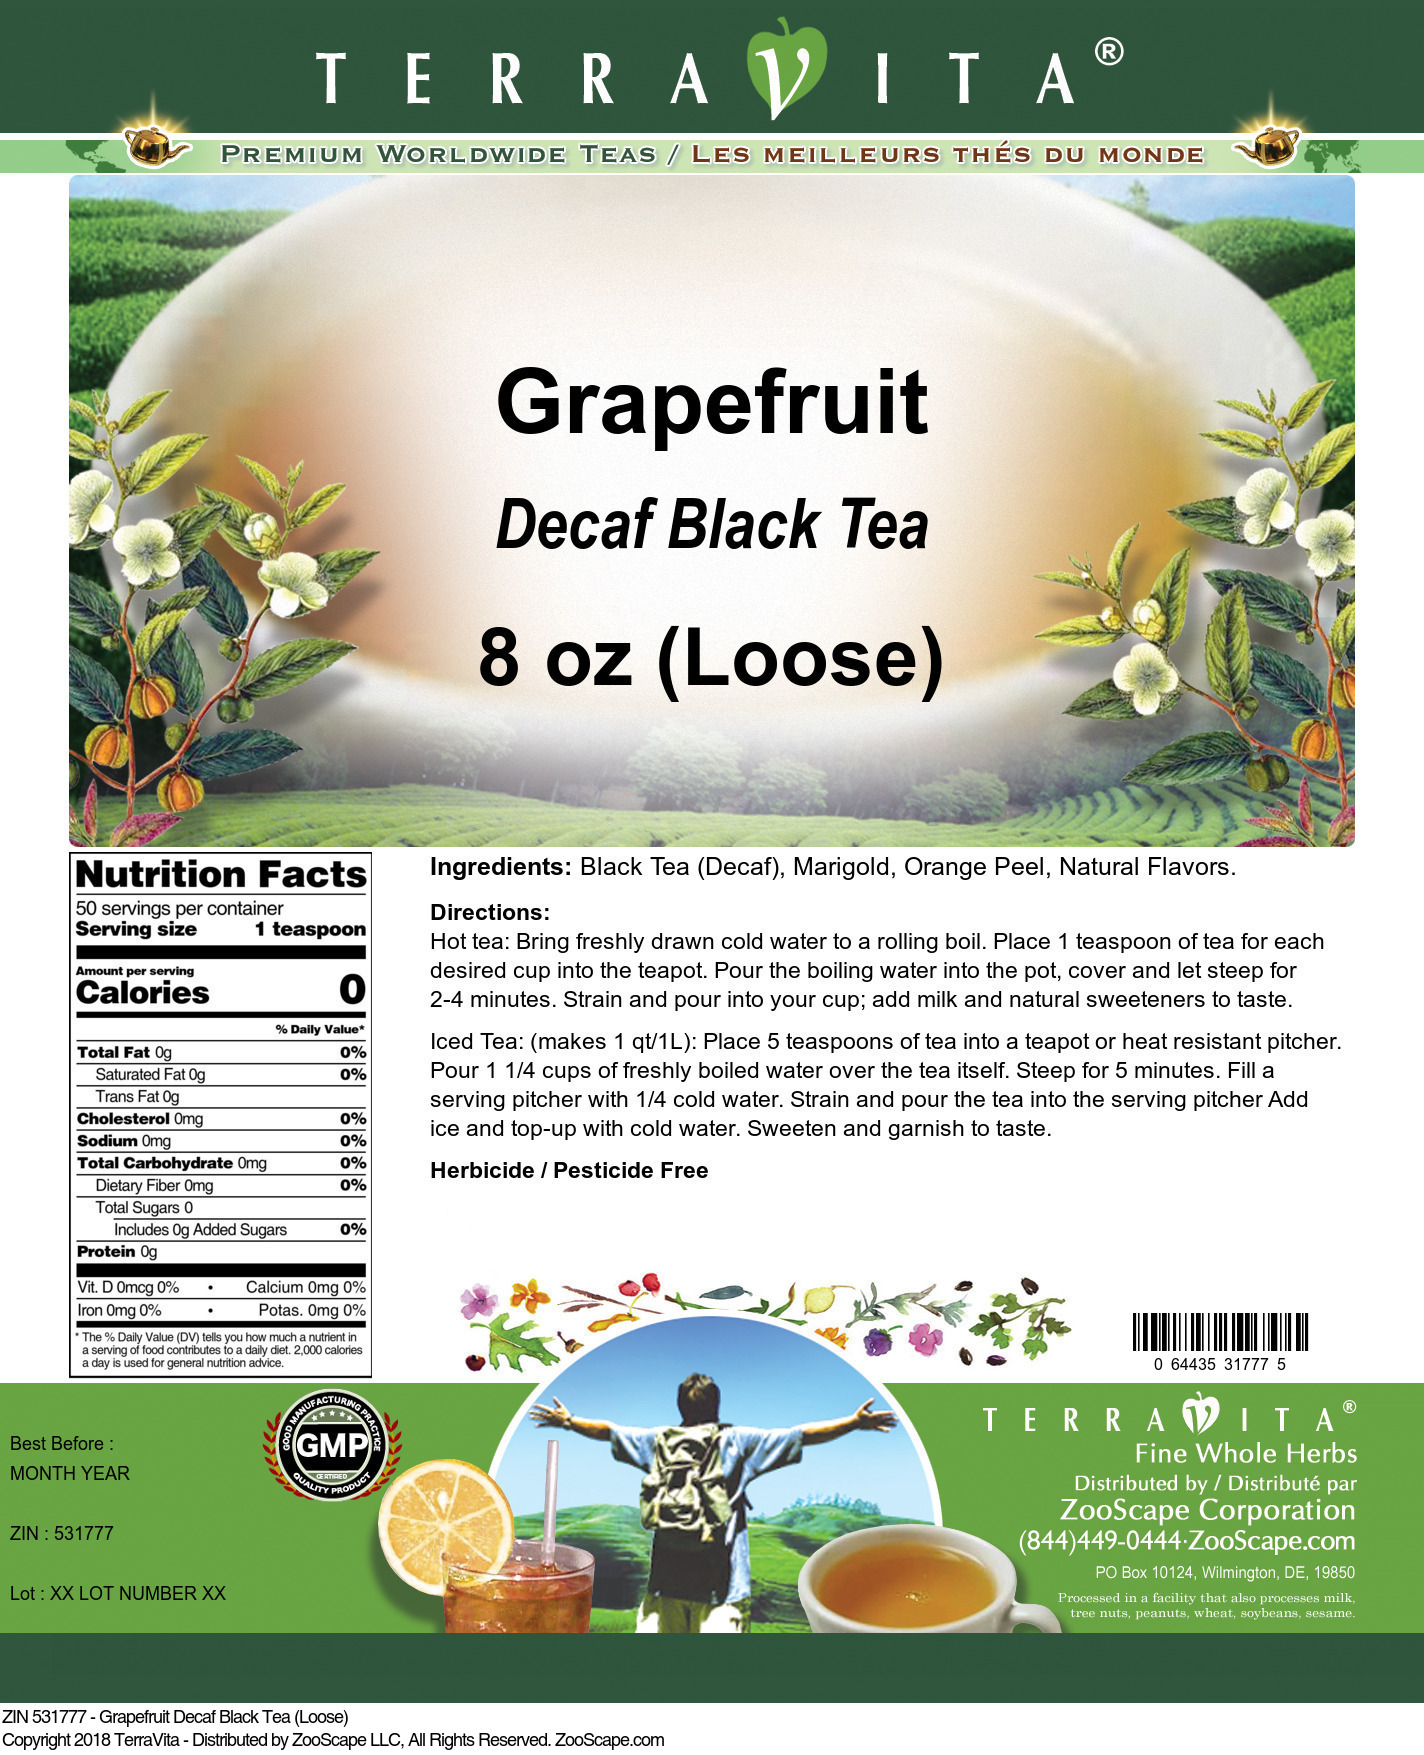 Grapefruit Decaf Black Tea (Loose) - Label